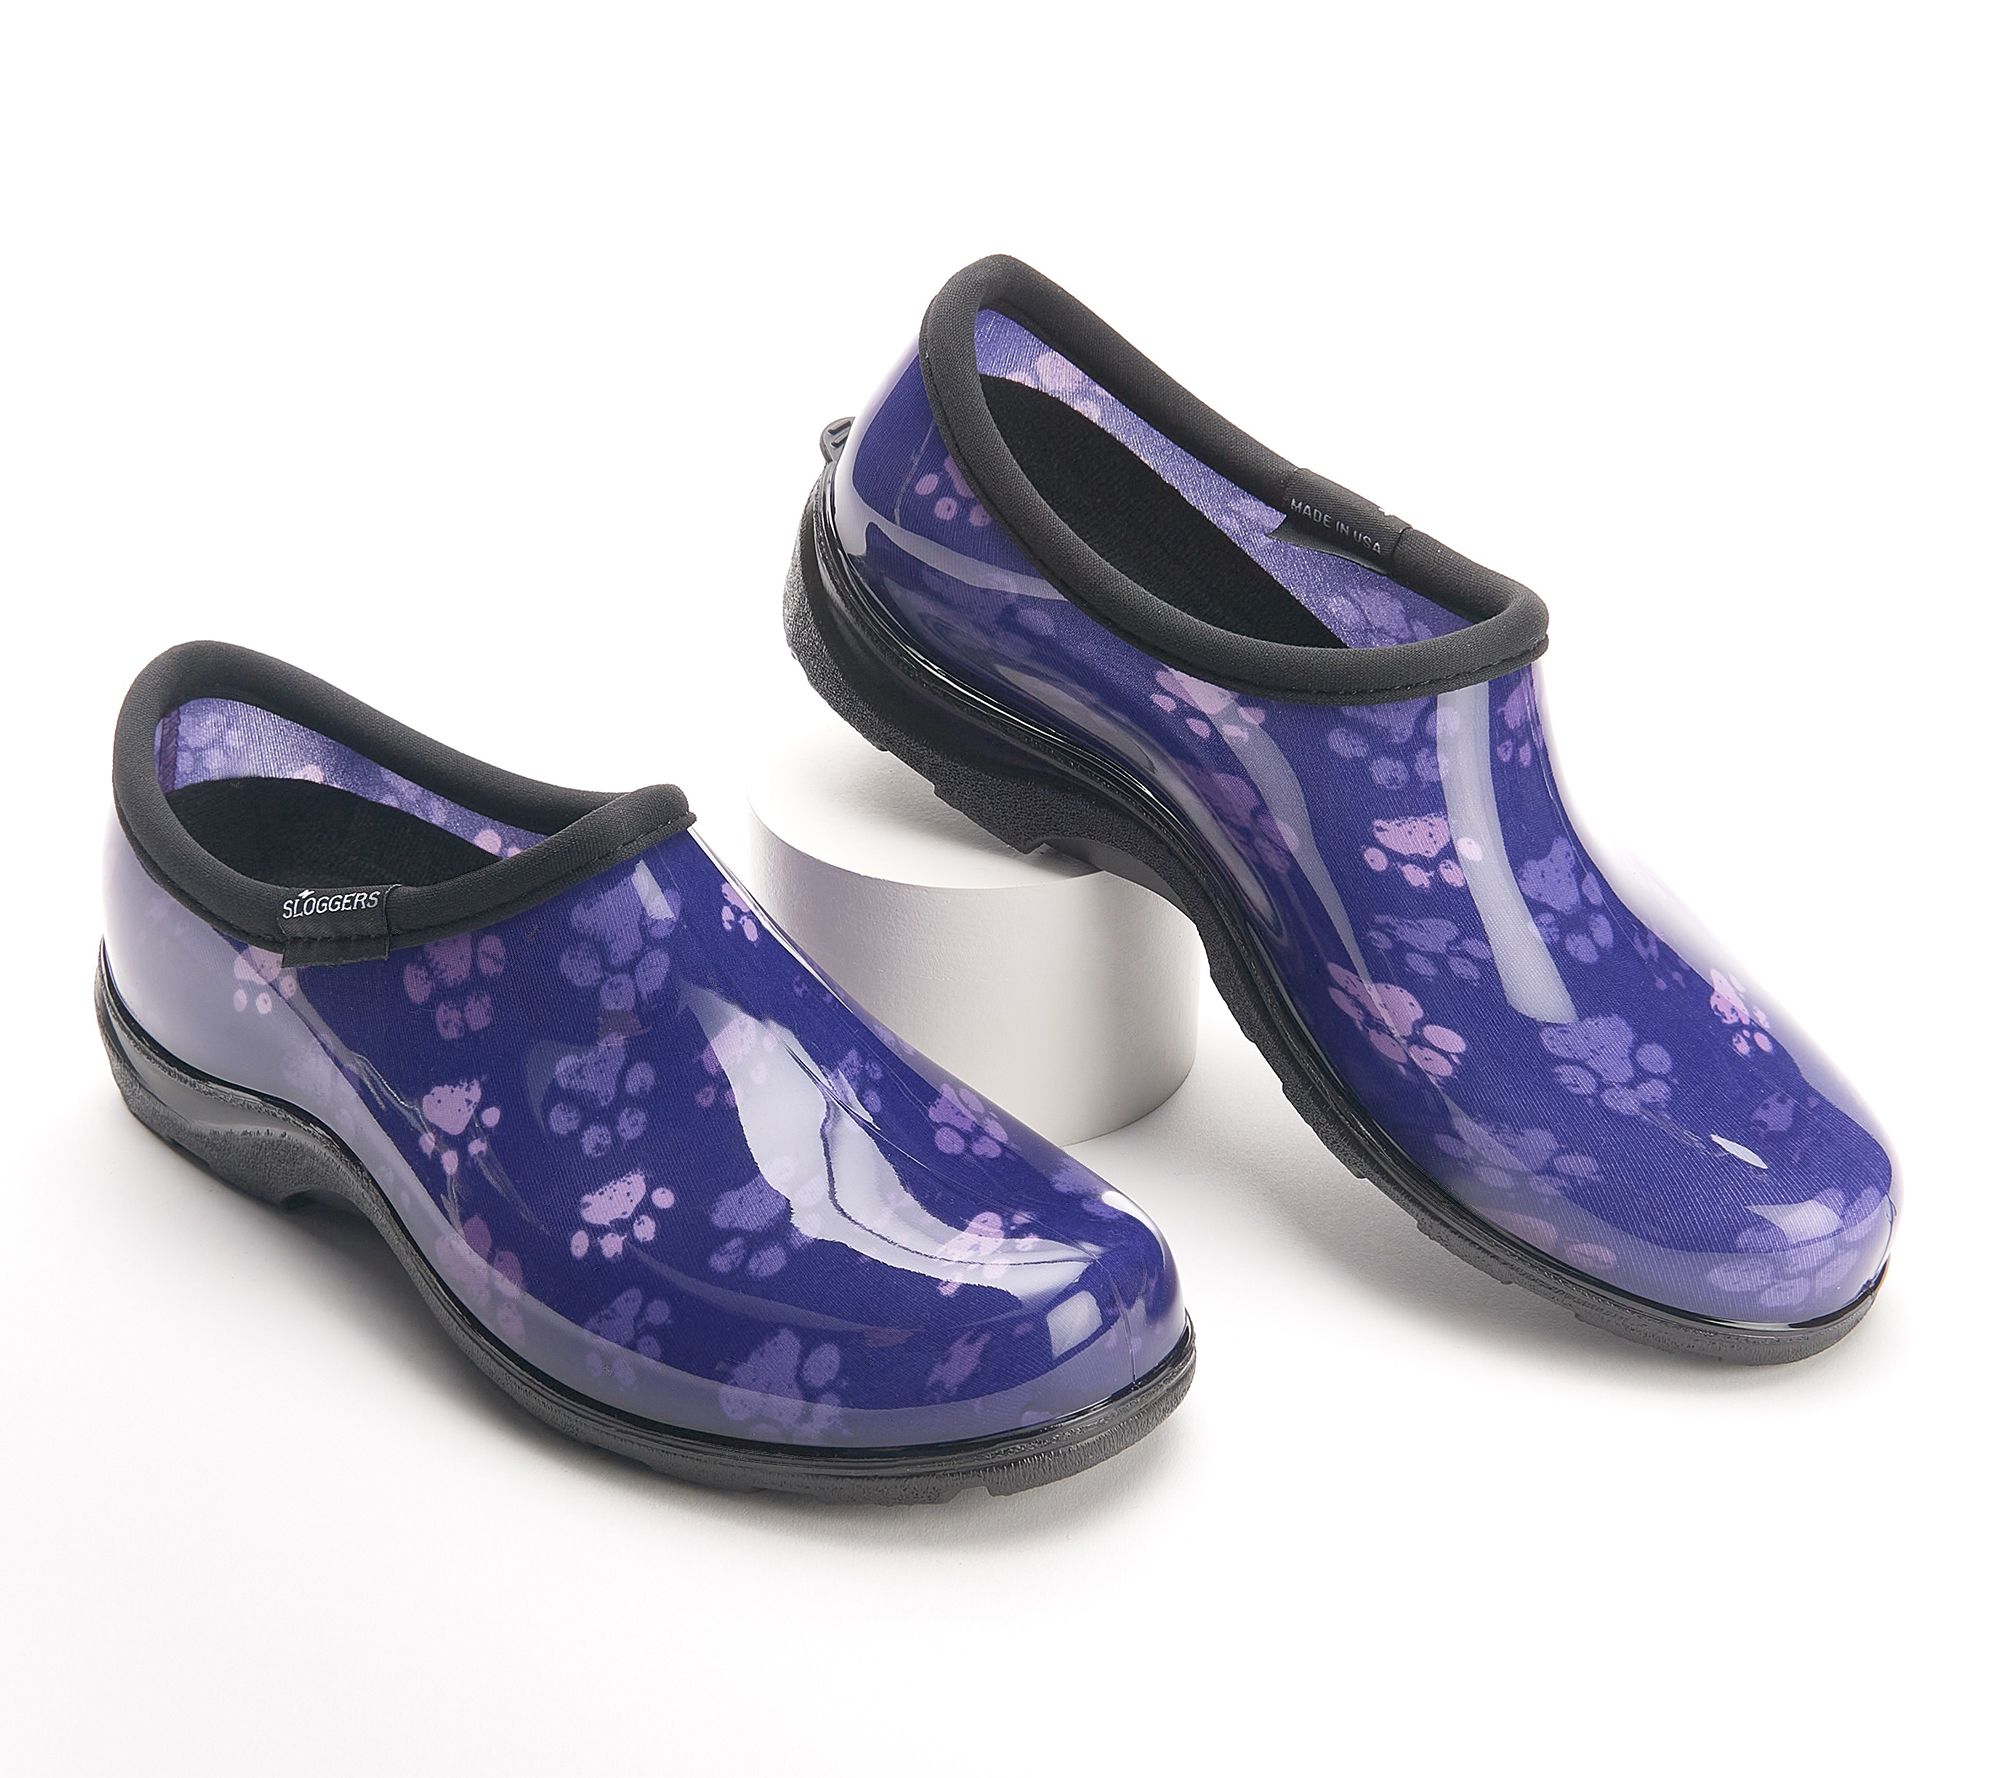 Sloggers Women's Garden/Rain Shoes 10 US Purple 